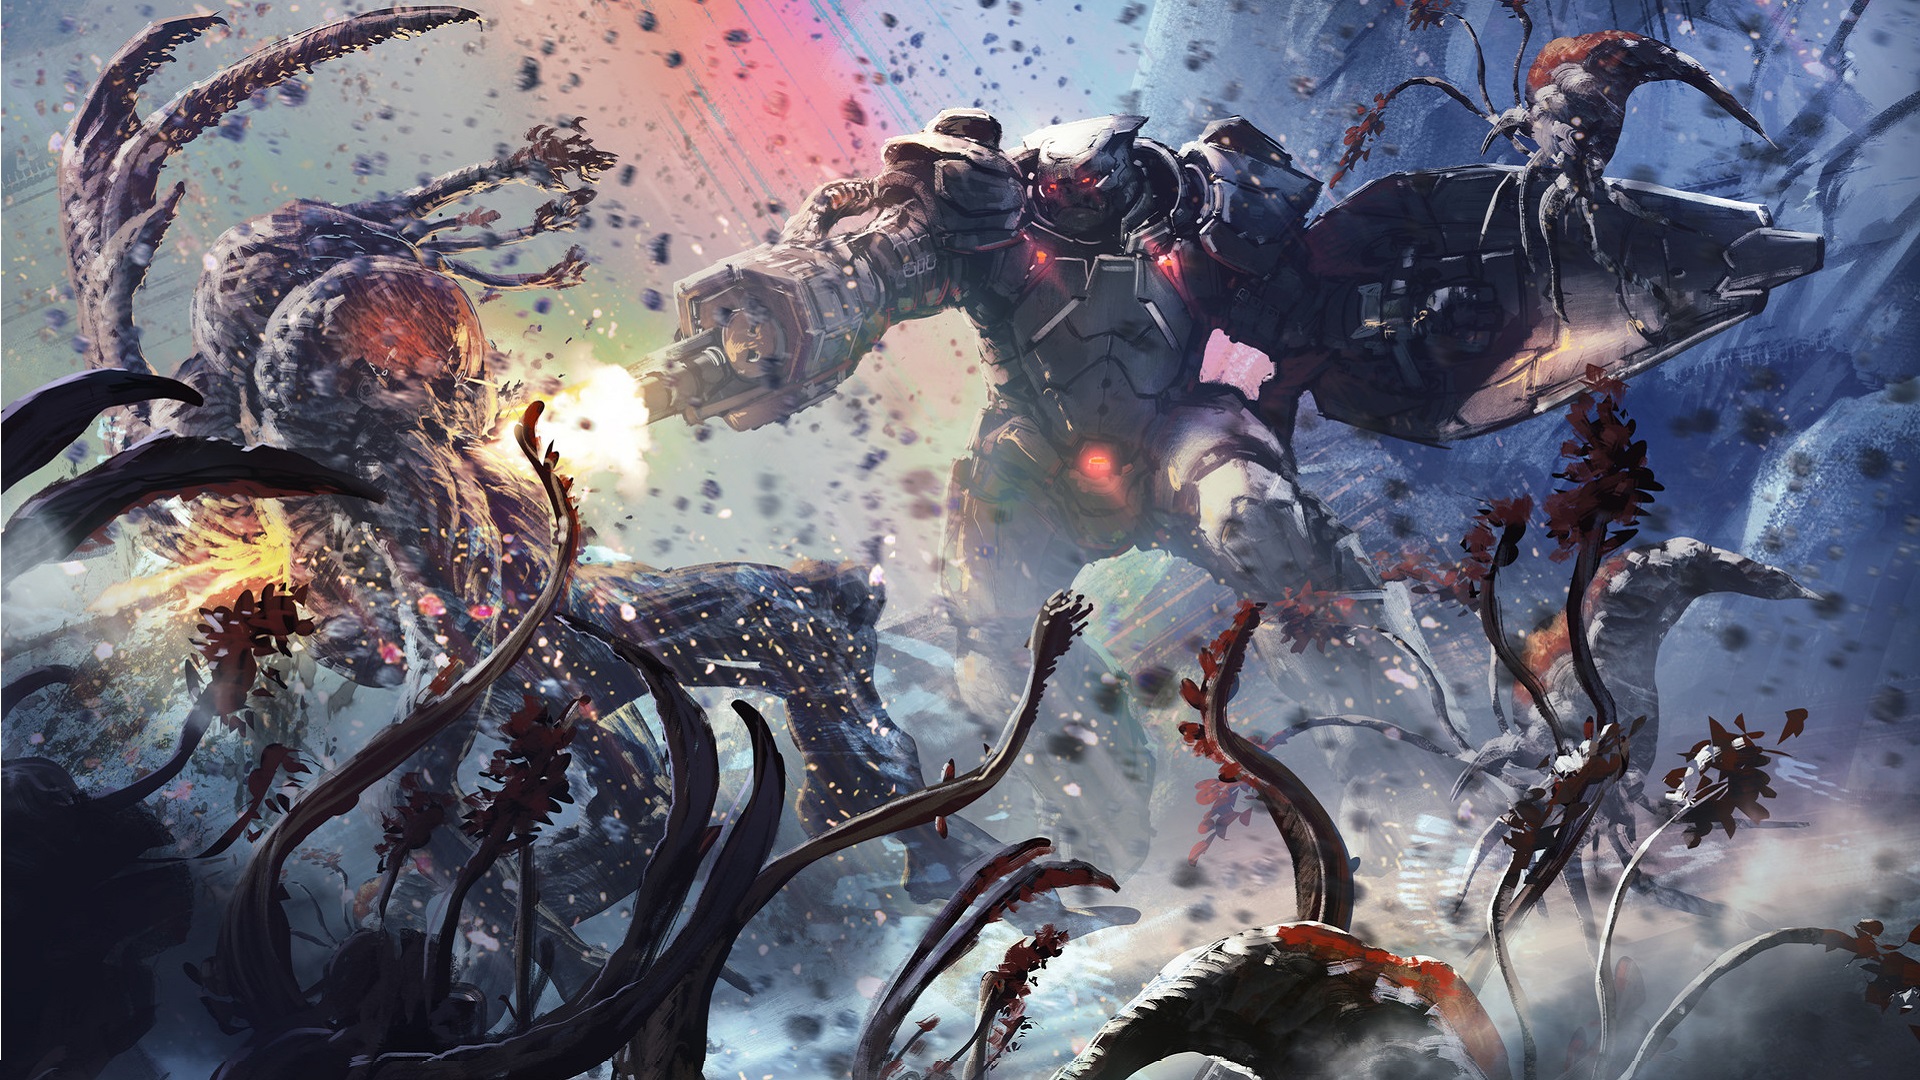 Video Games Halo Science Fiction Aliens Covenant Flood Halo Halo Wars 2 Battle Brute Digital Art Shi 1920x1080